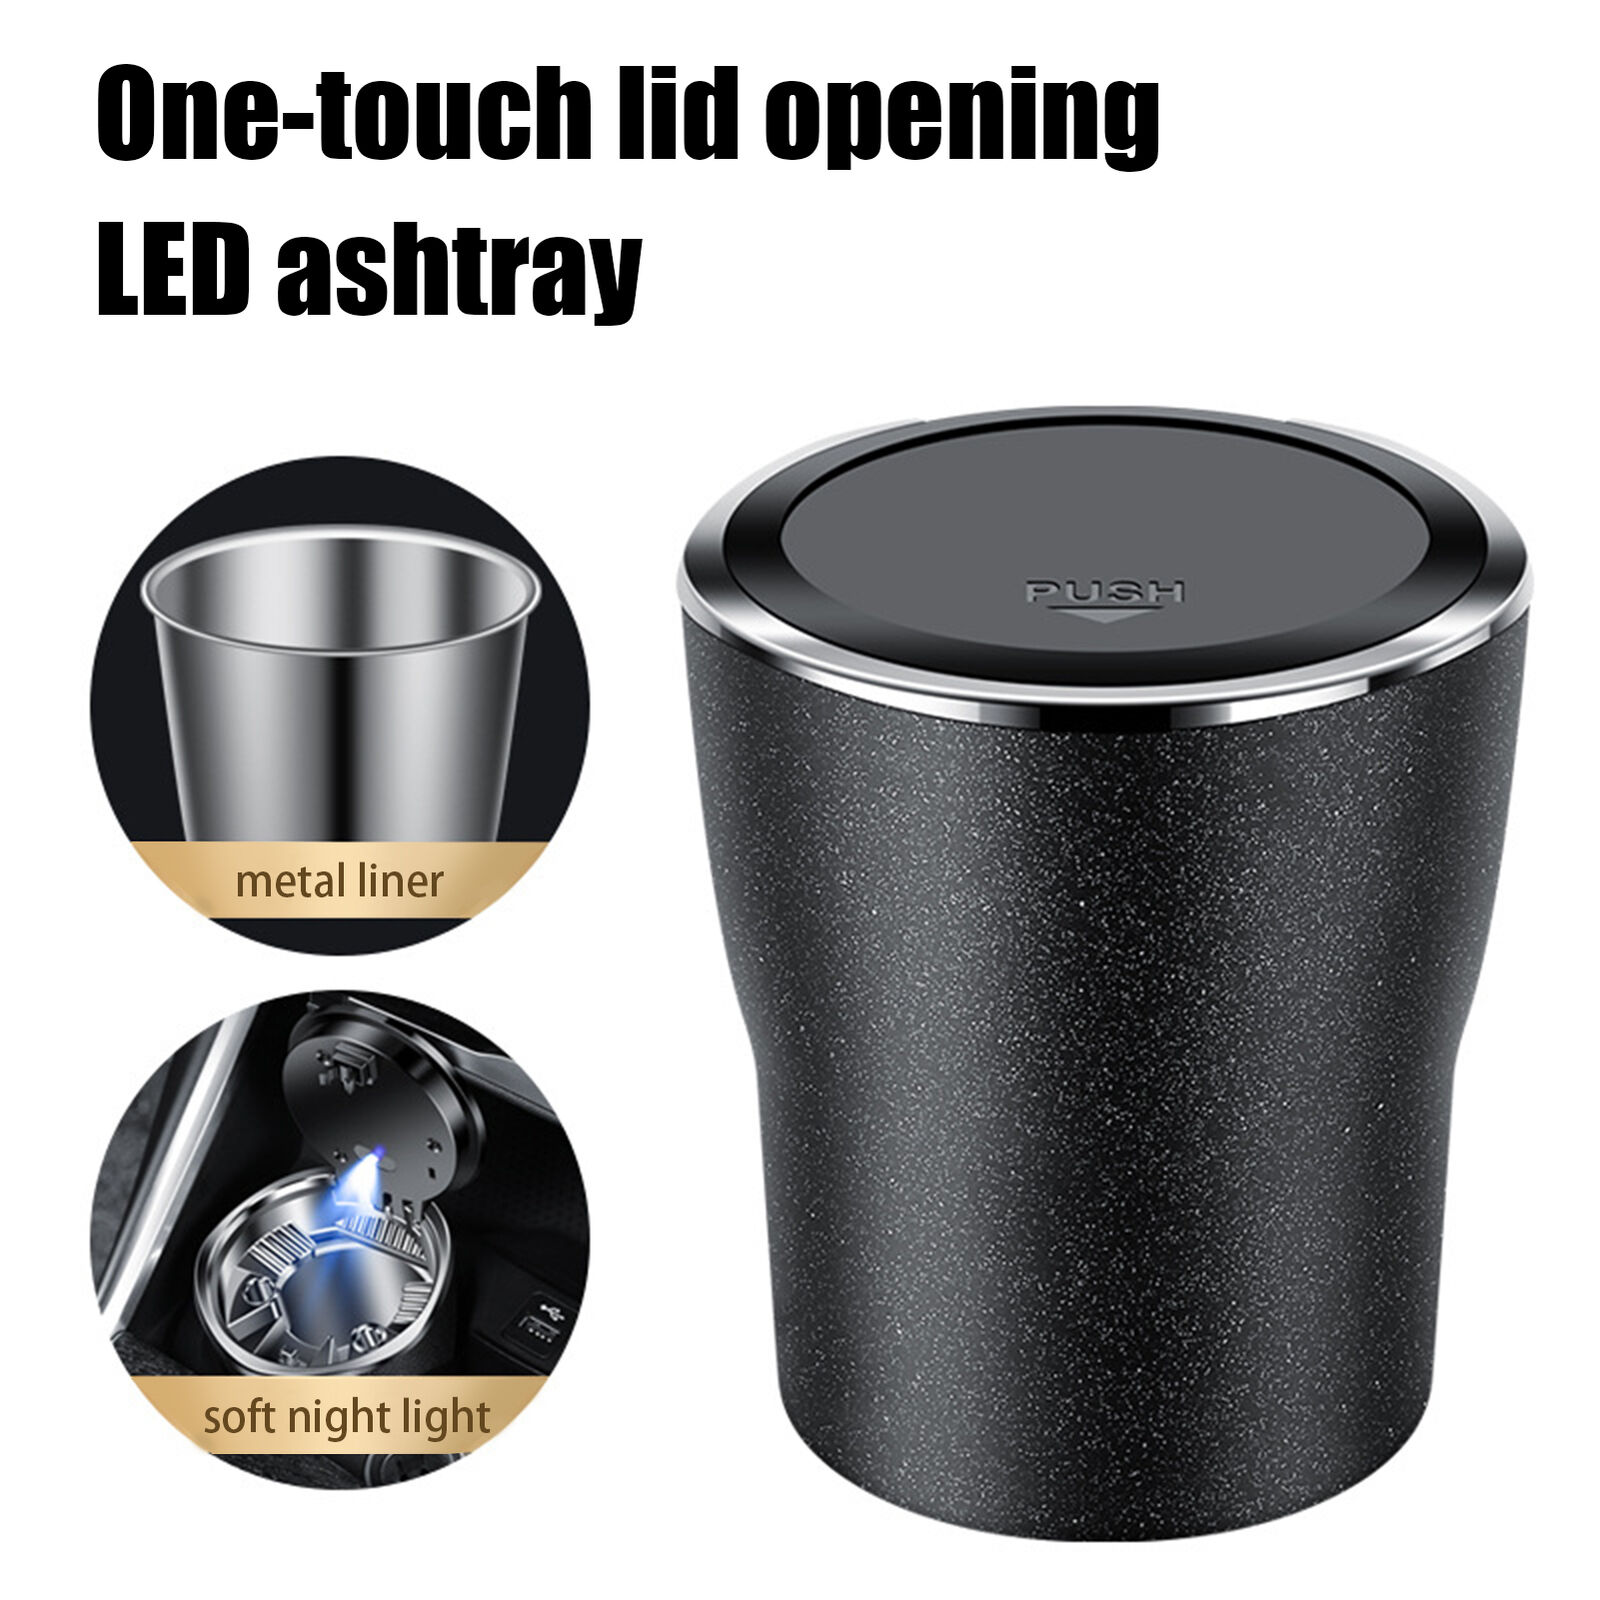 Car Ashtray With Lid | Smokeless Ashtray With LED Light | Mini Car Trash Can 